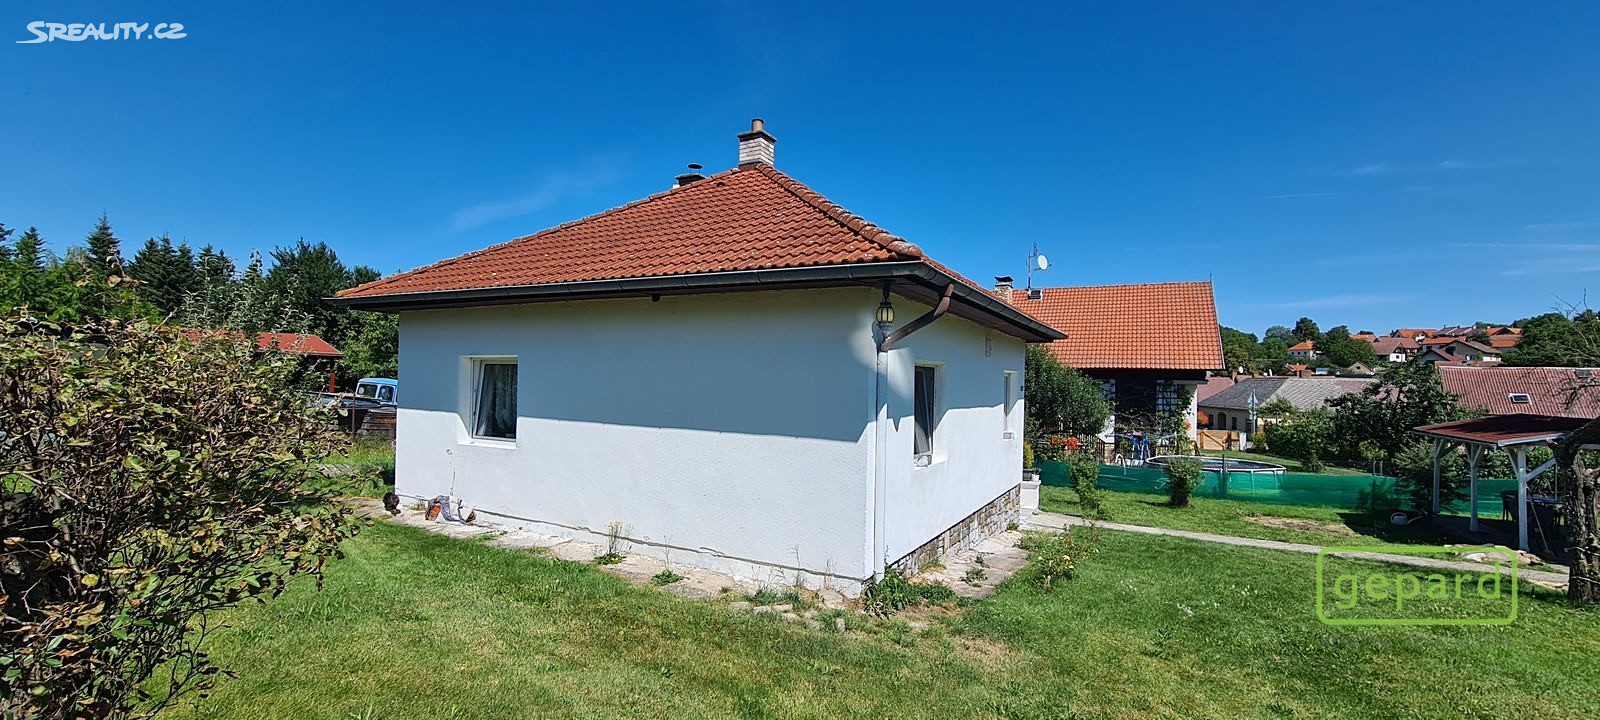 Prodej  rodinného domu 93 m², pozemek 82 m², Brloh, okres Český Krumlov